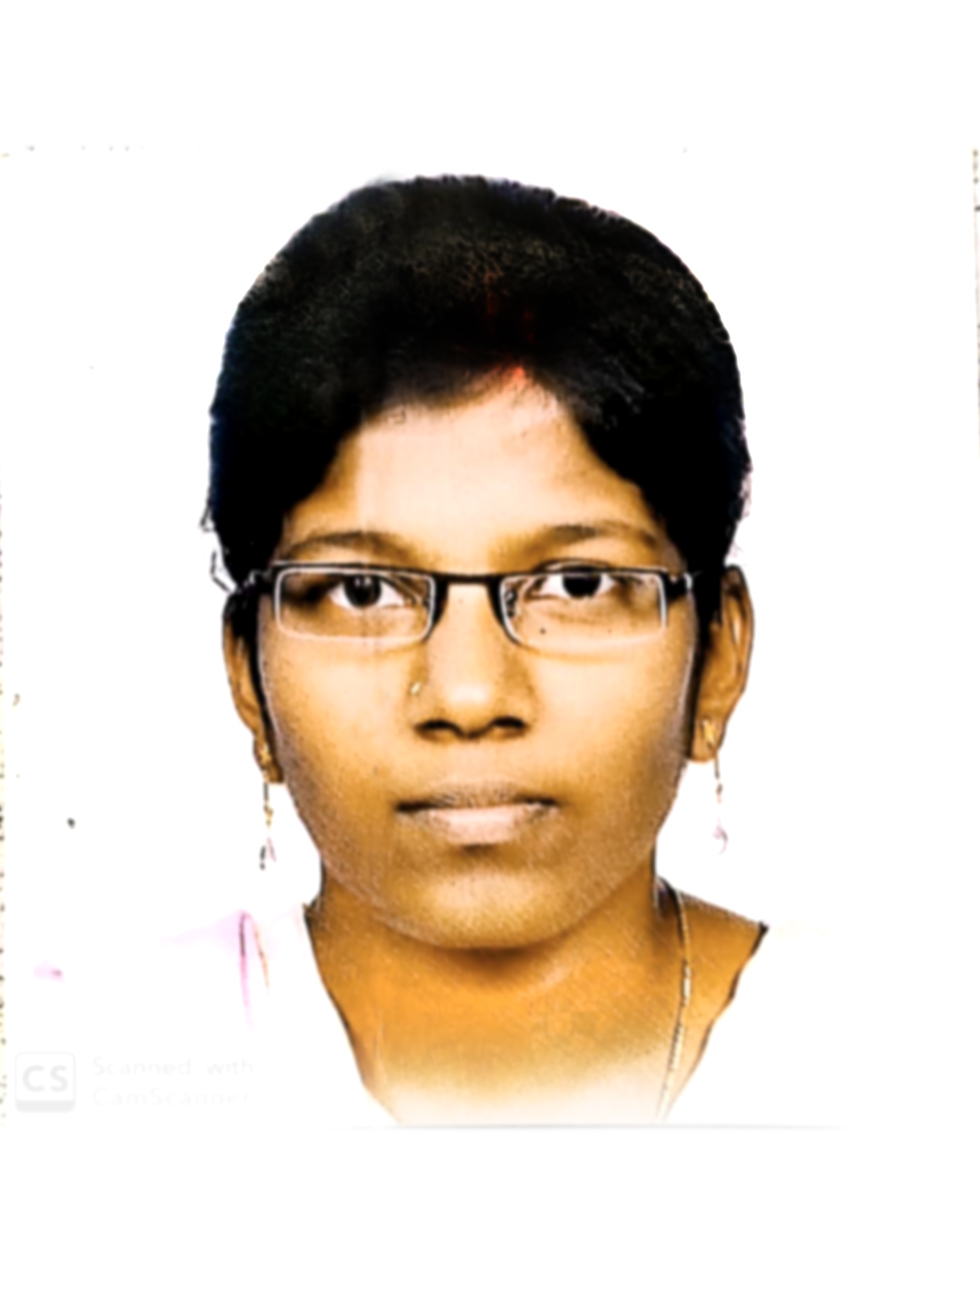 PadmaPriya M(831500110) M.SC(CS)-April 2017 Rank 94